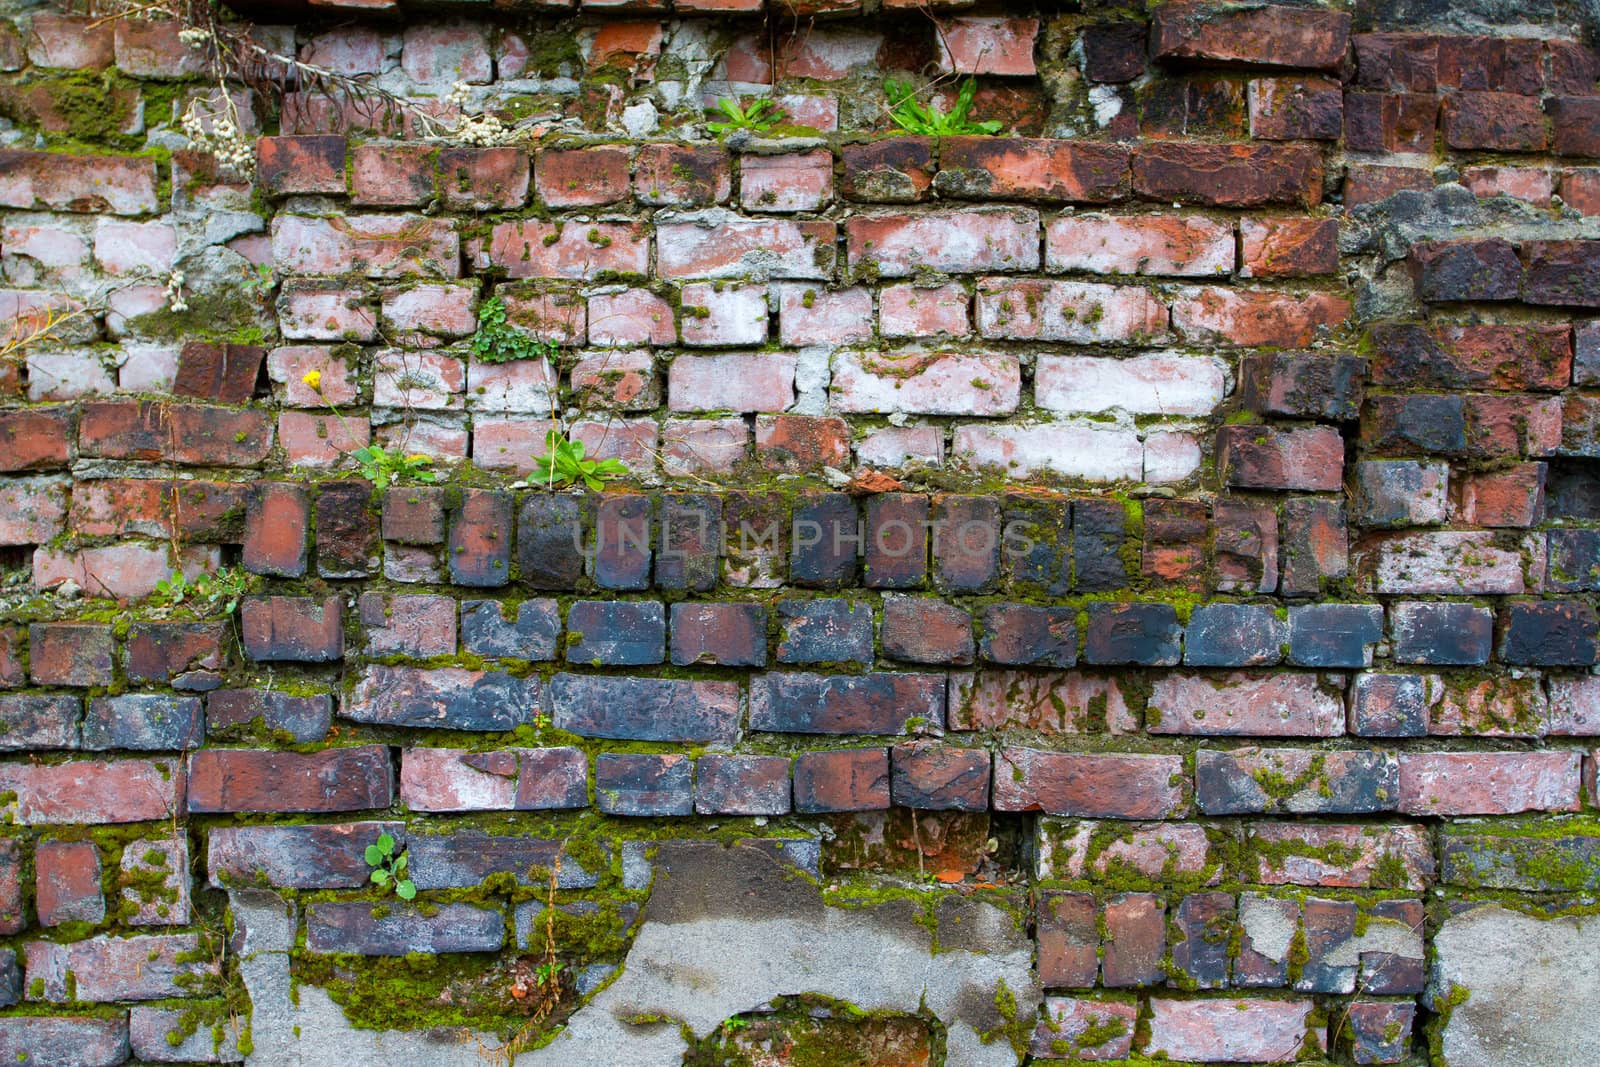 Decaying Bricks by joshuaraineyphotography